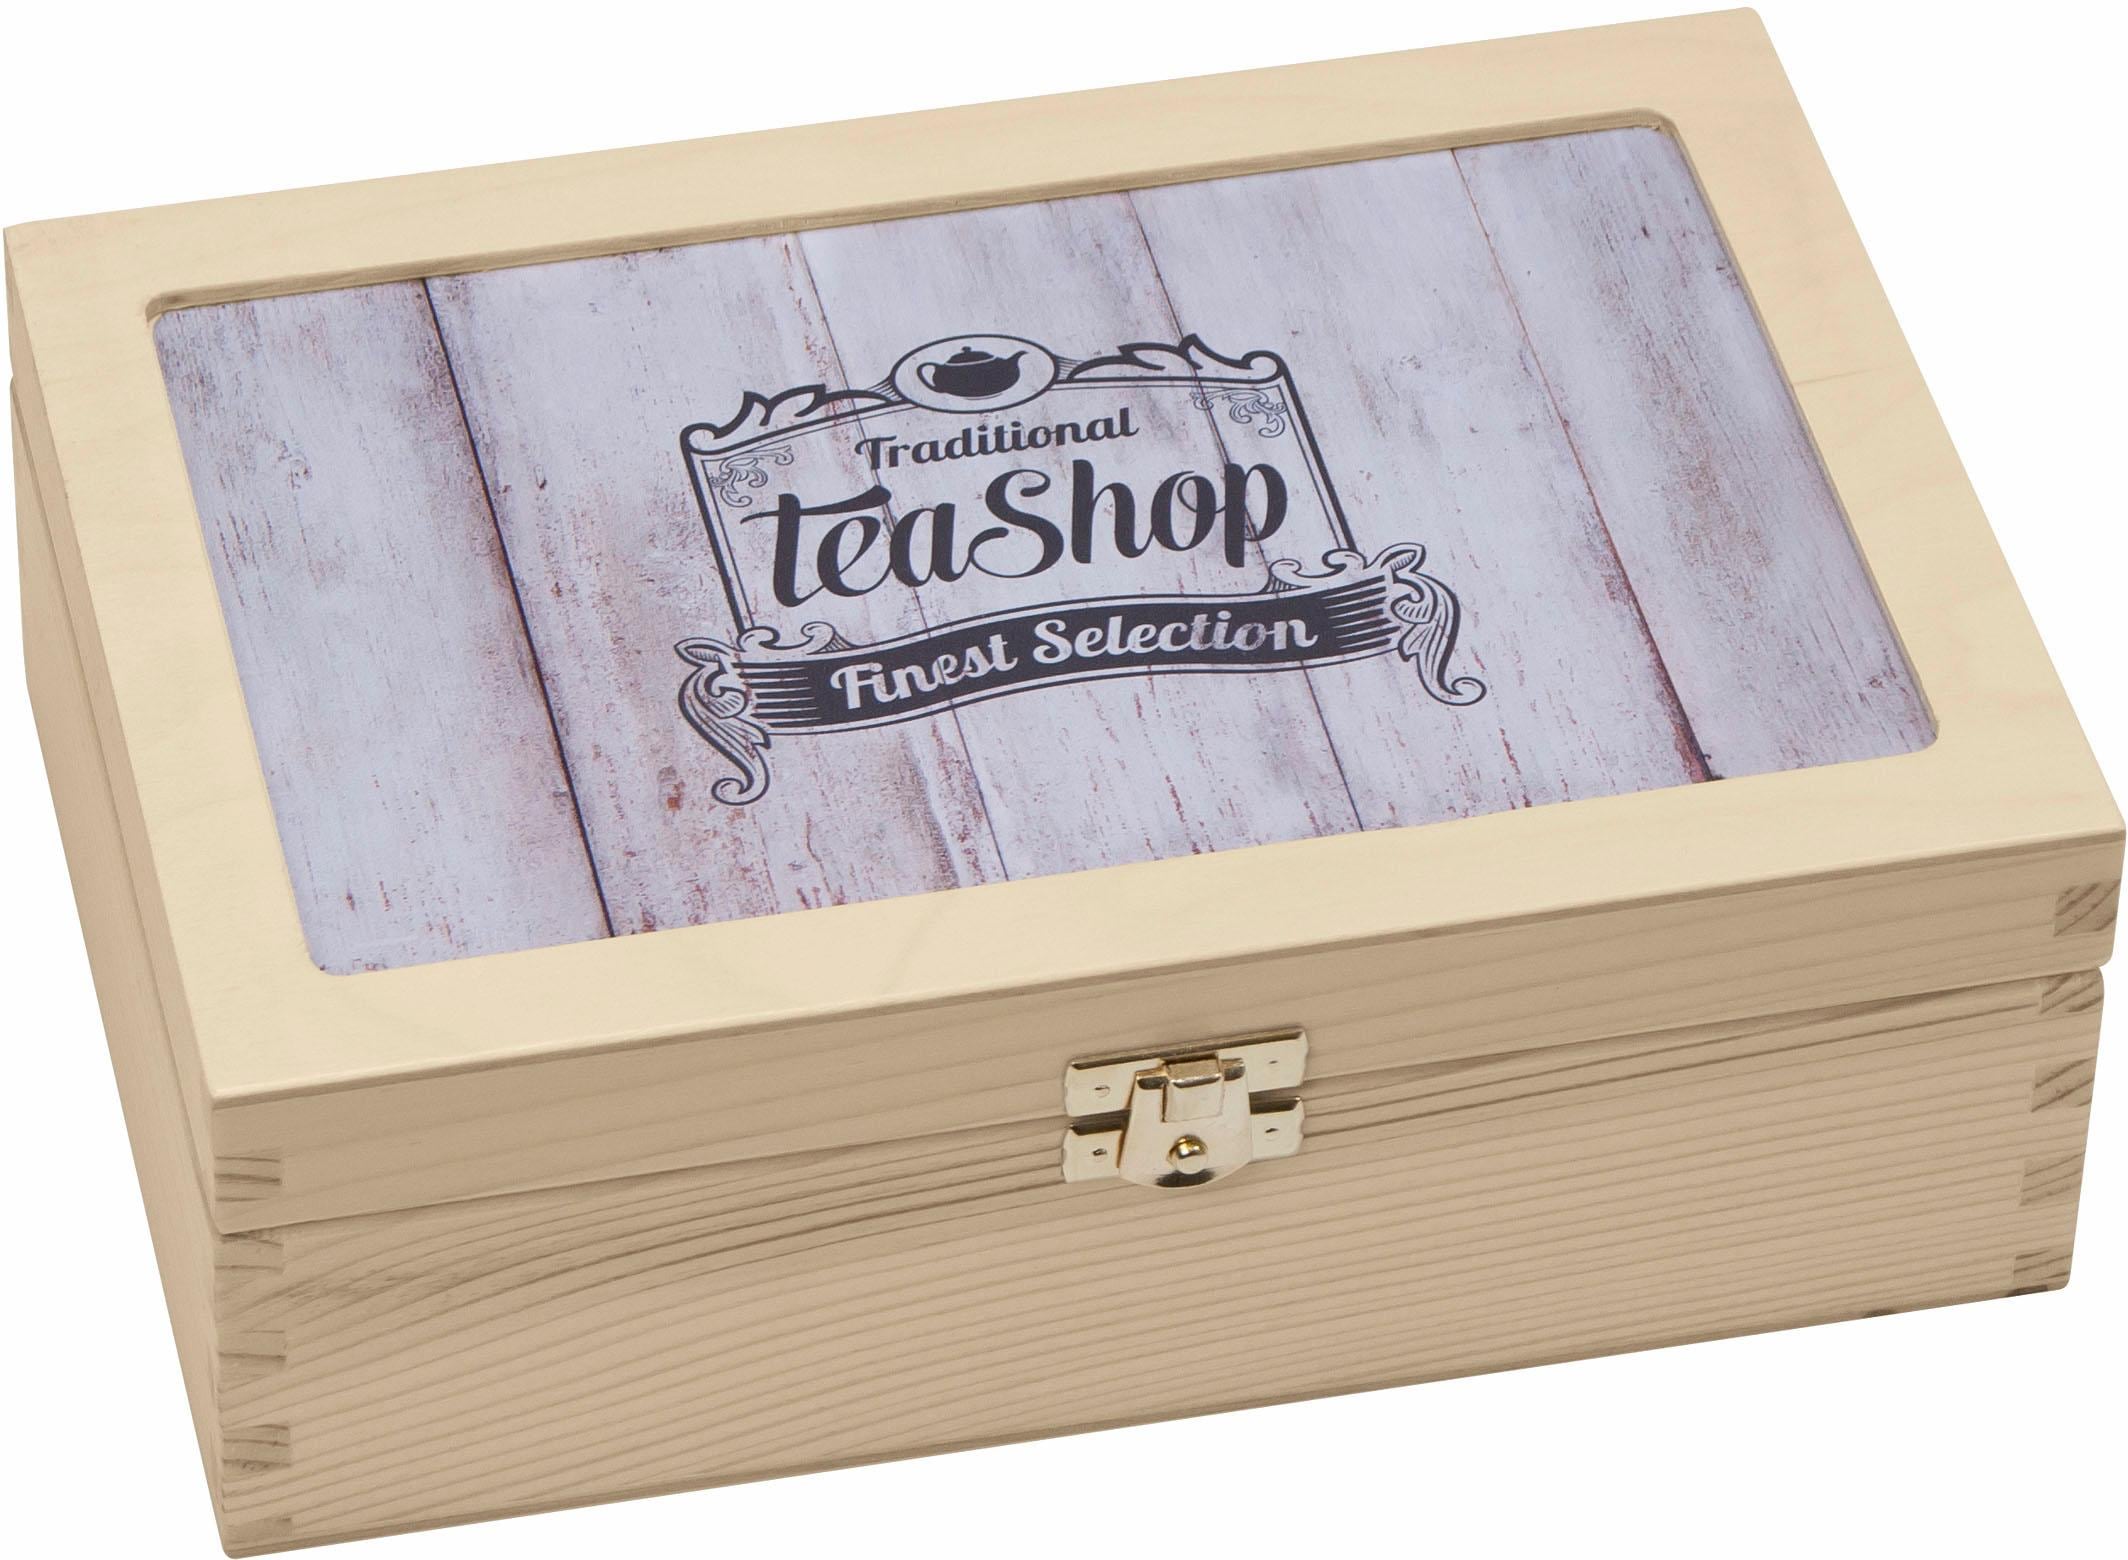 Teebox »Traditional Tea-Shop Finest Selection«, (1 tlg.)